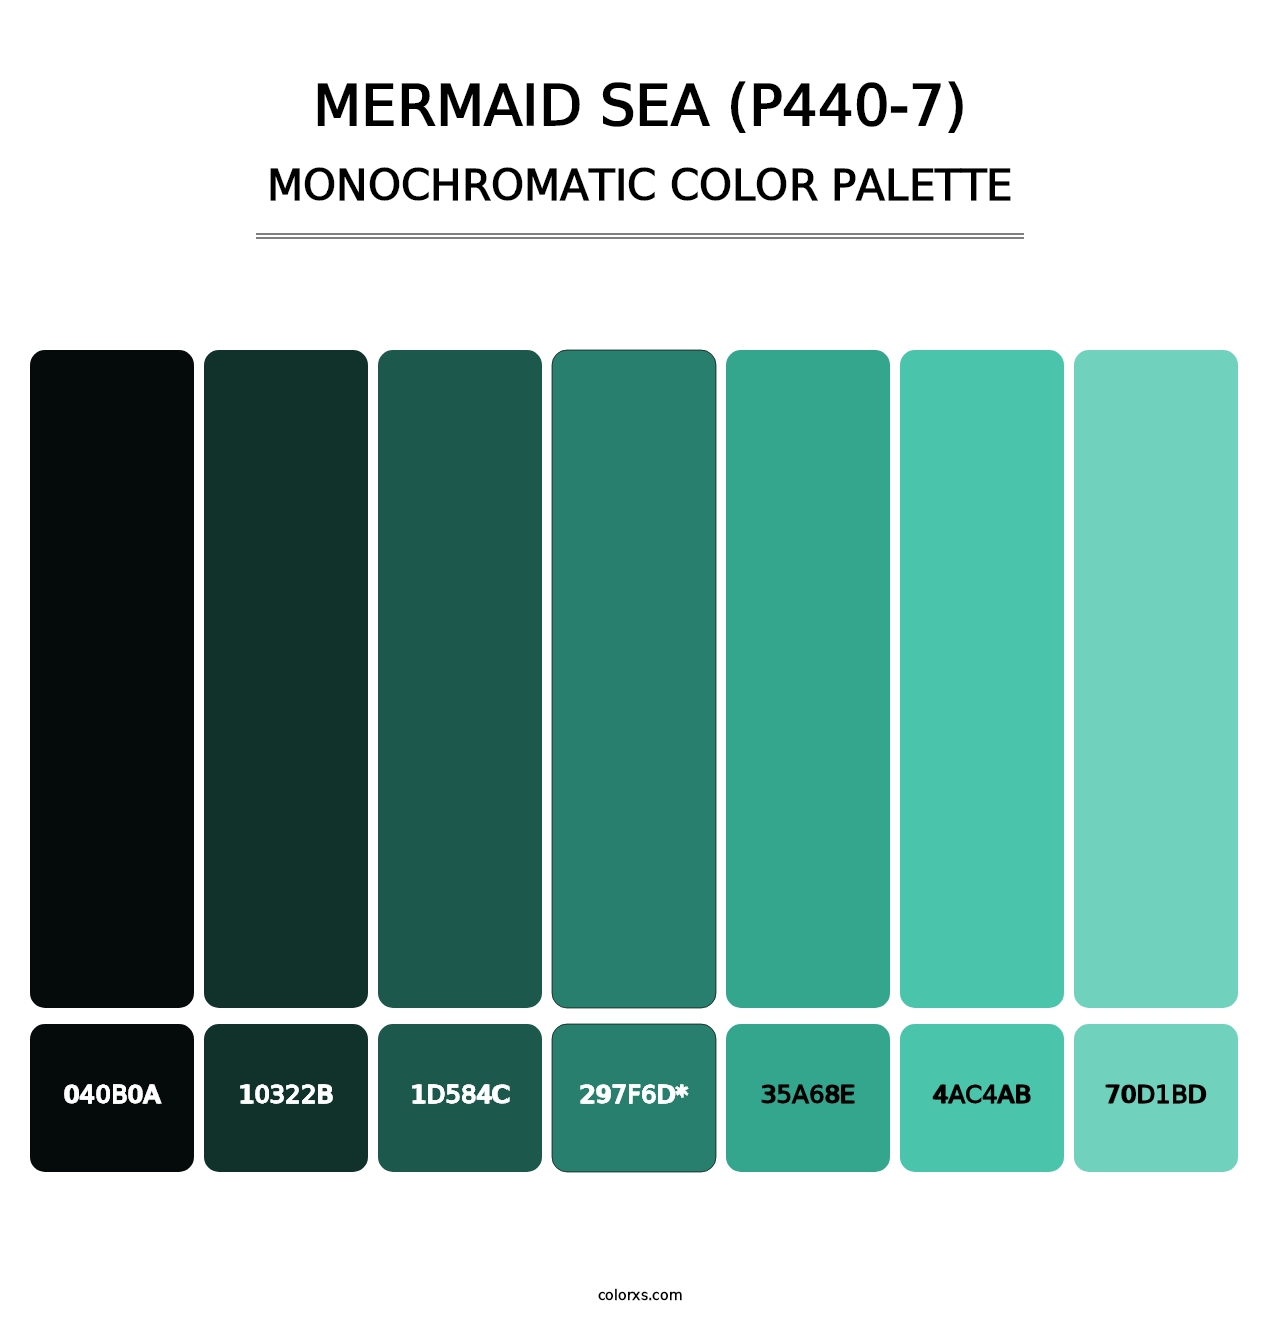 Mermaid Sea (P440-7) - Monochromatic Color Palette